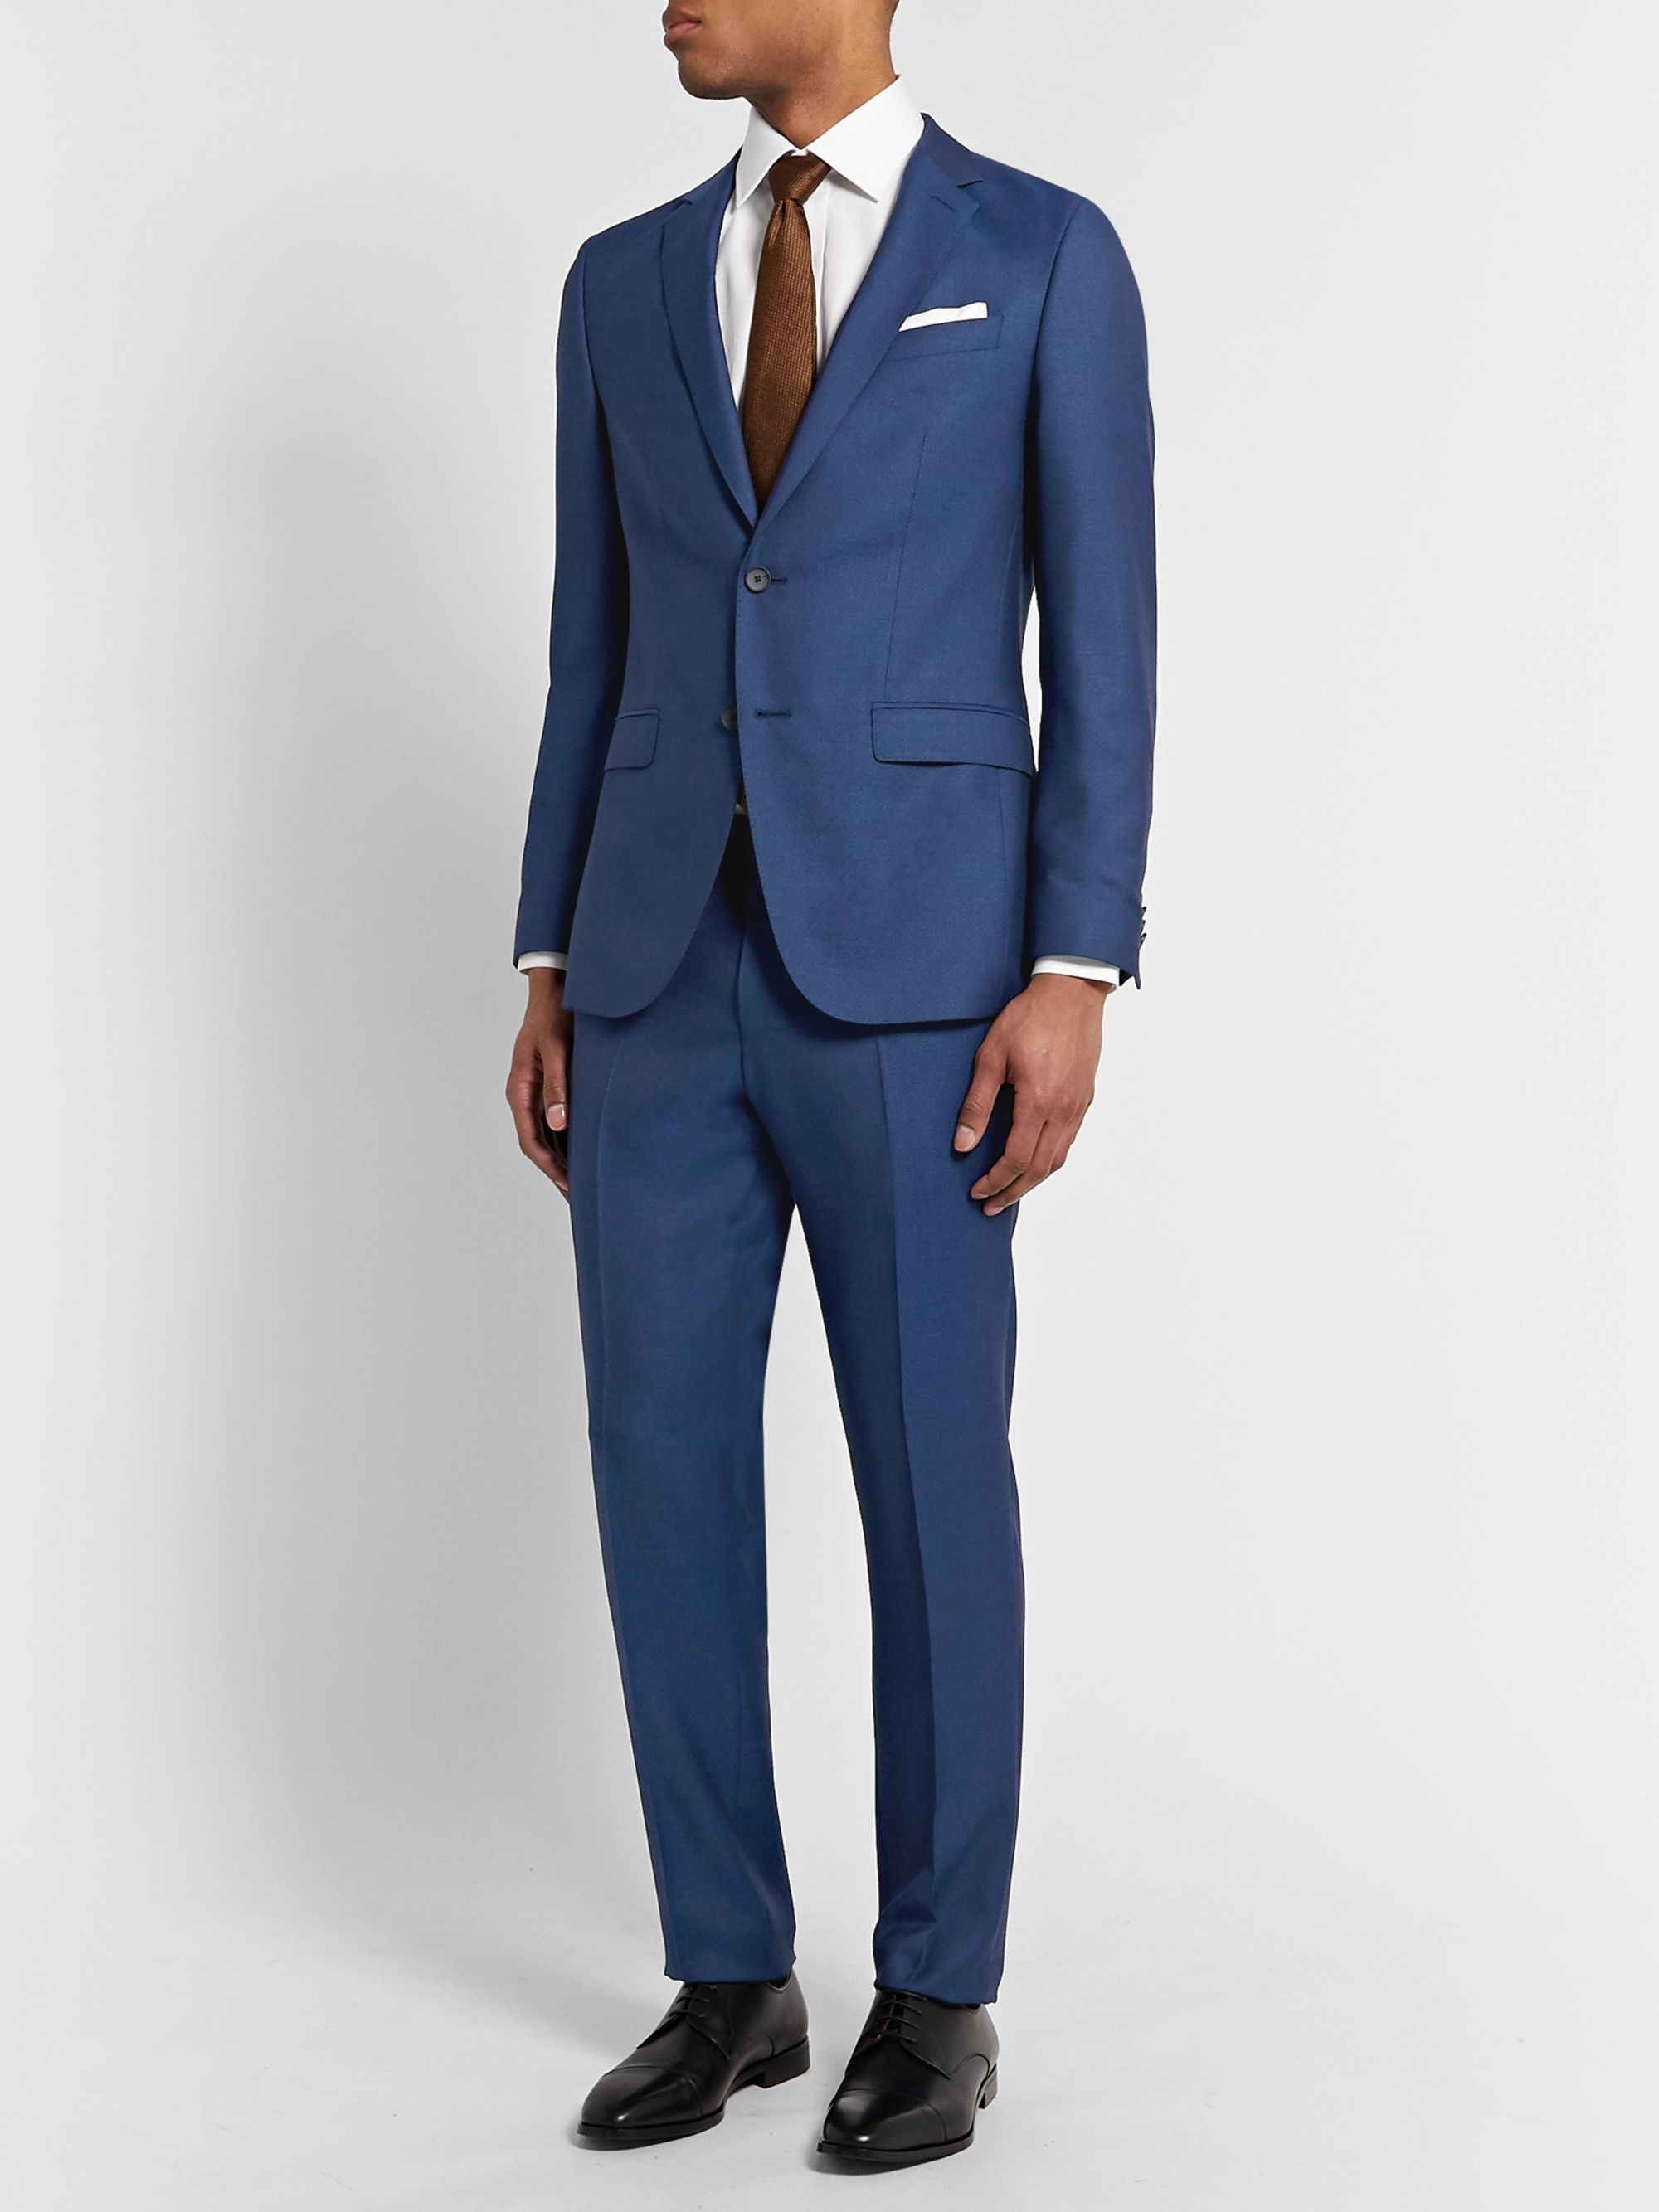 hugo boss slim fit blue suit 